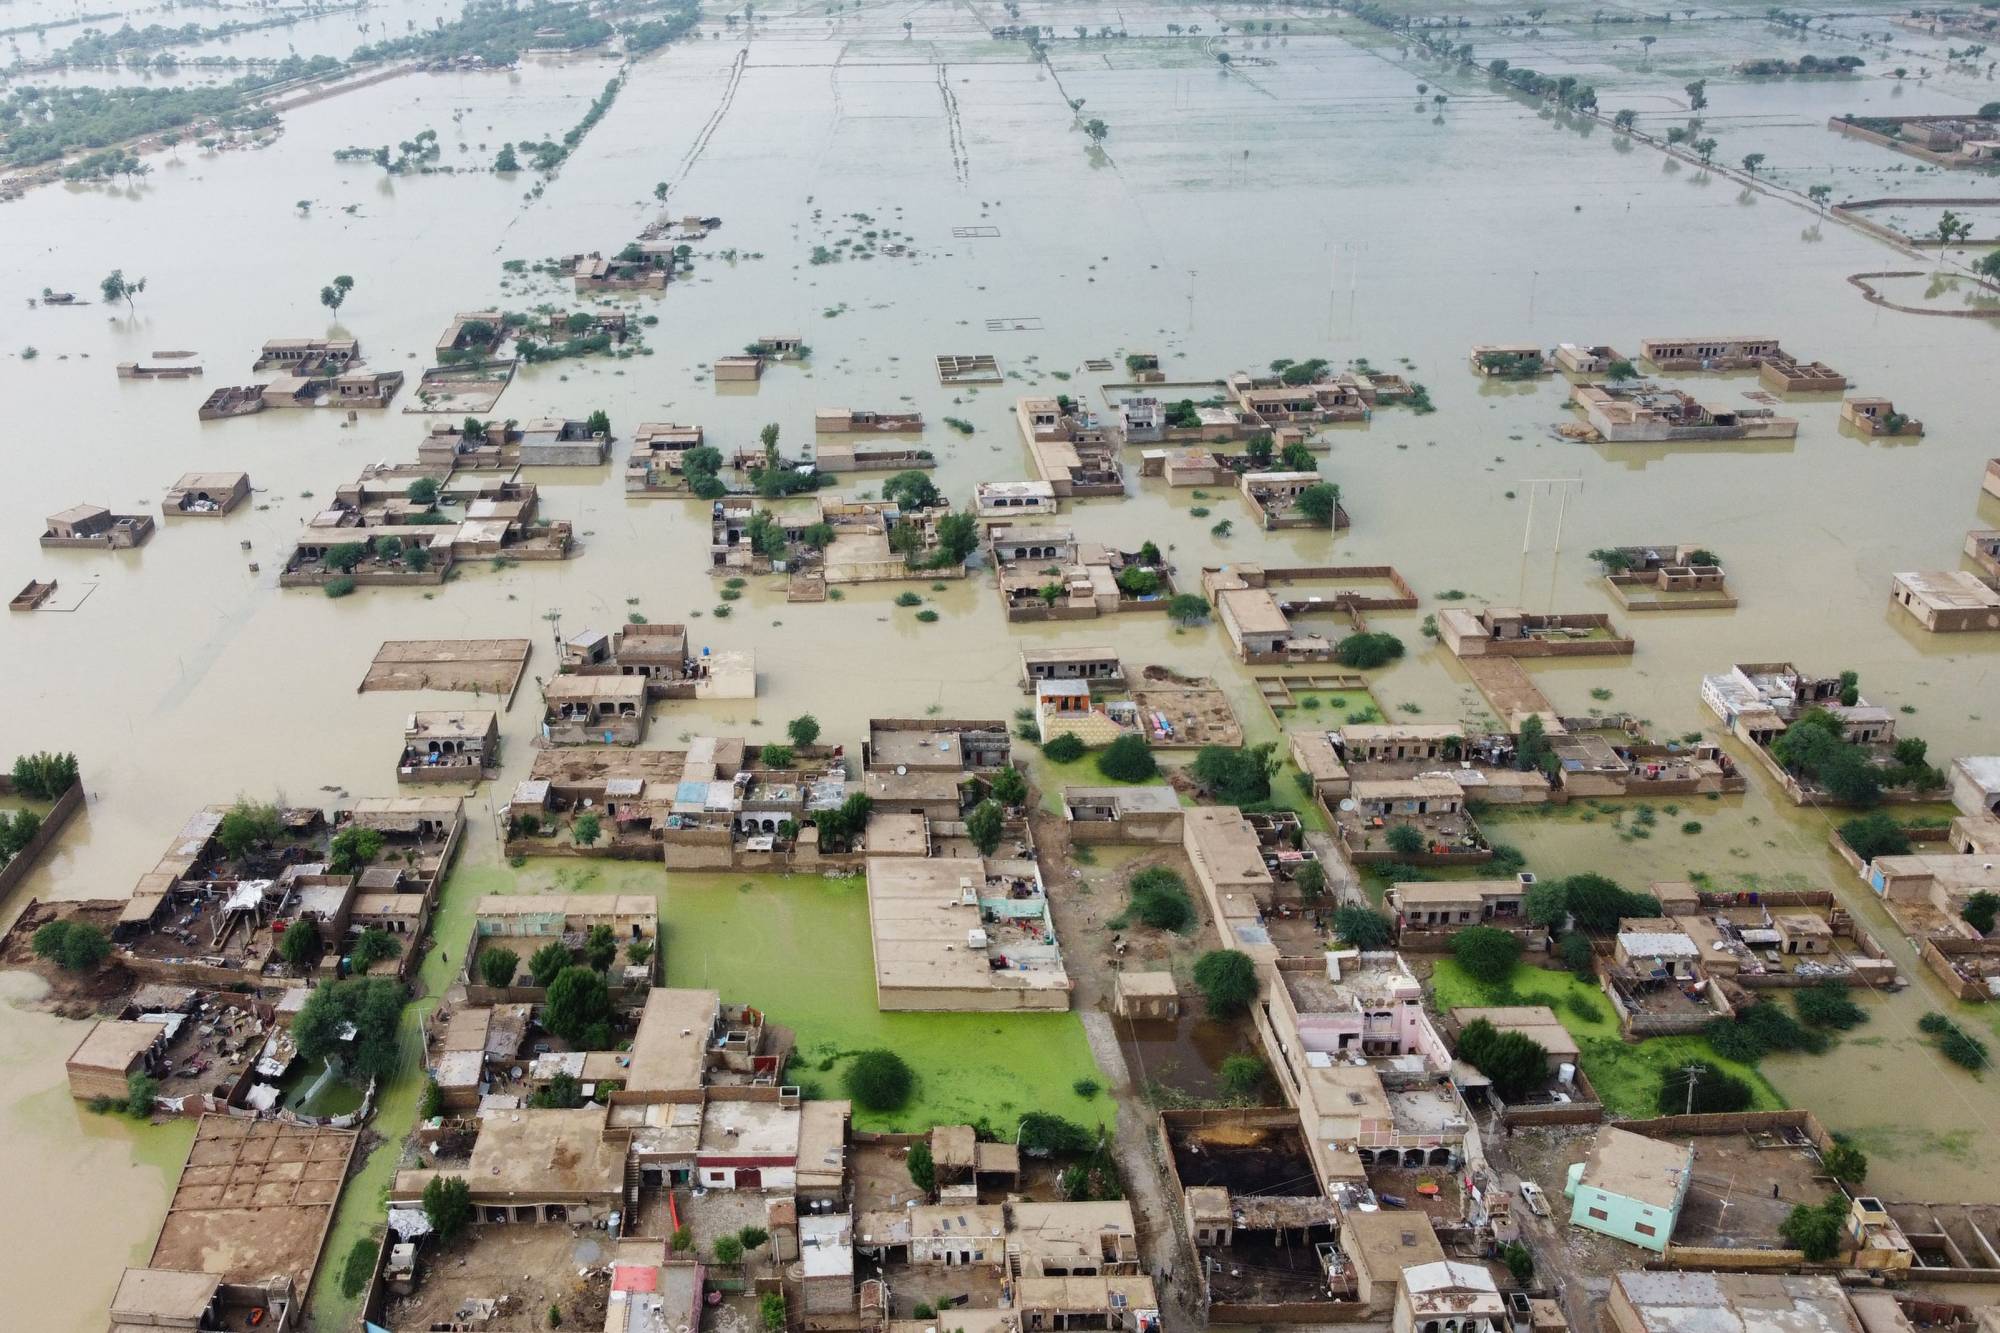 Pakistan Floods 